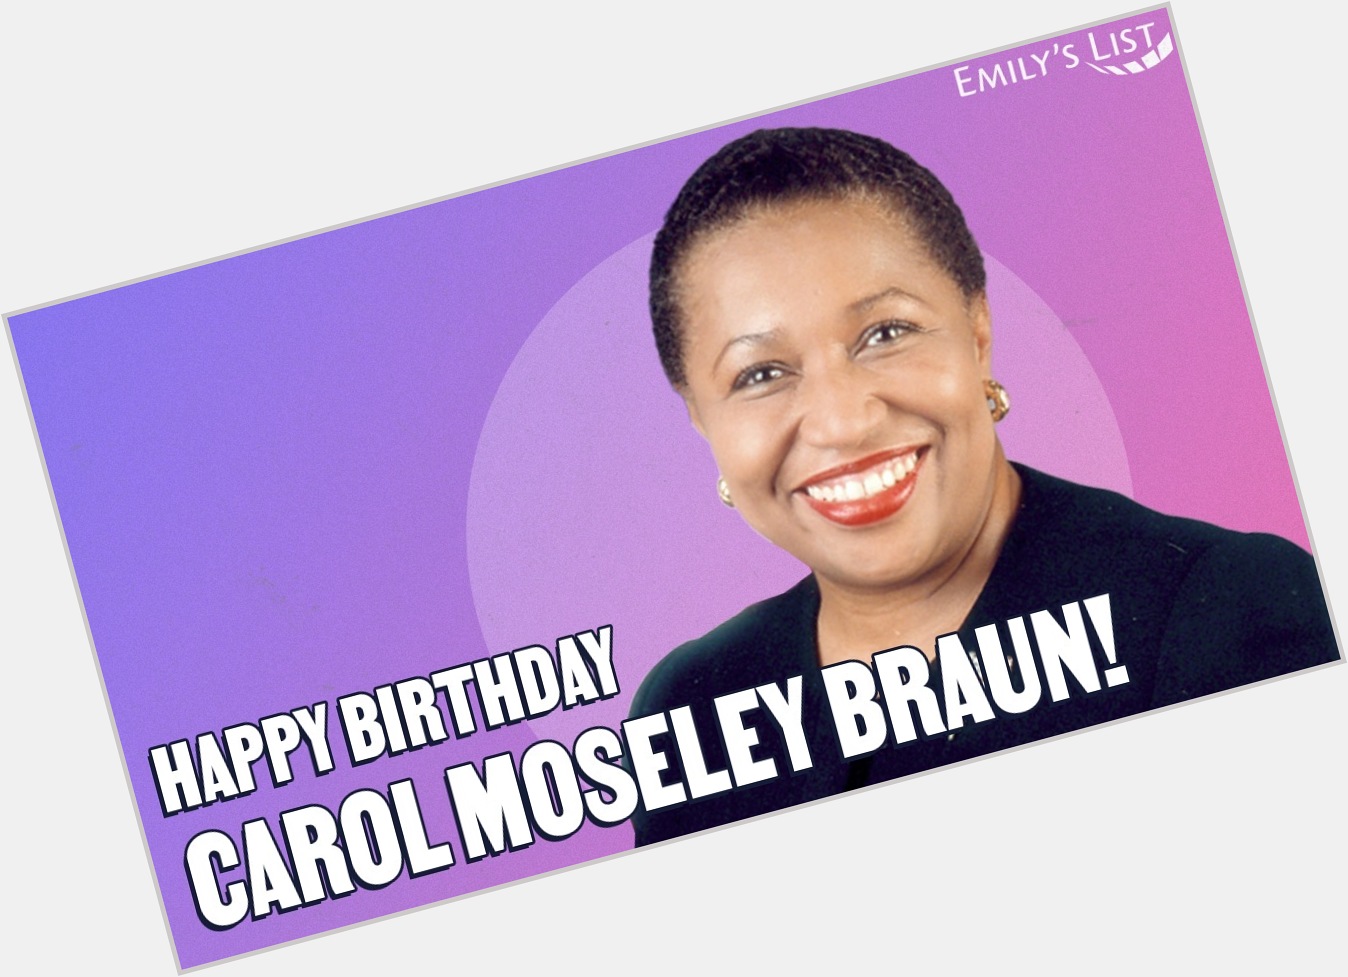 Happy birthday to Carol Moseley Braun! 
